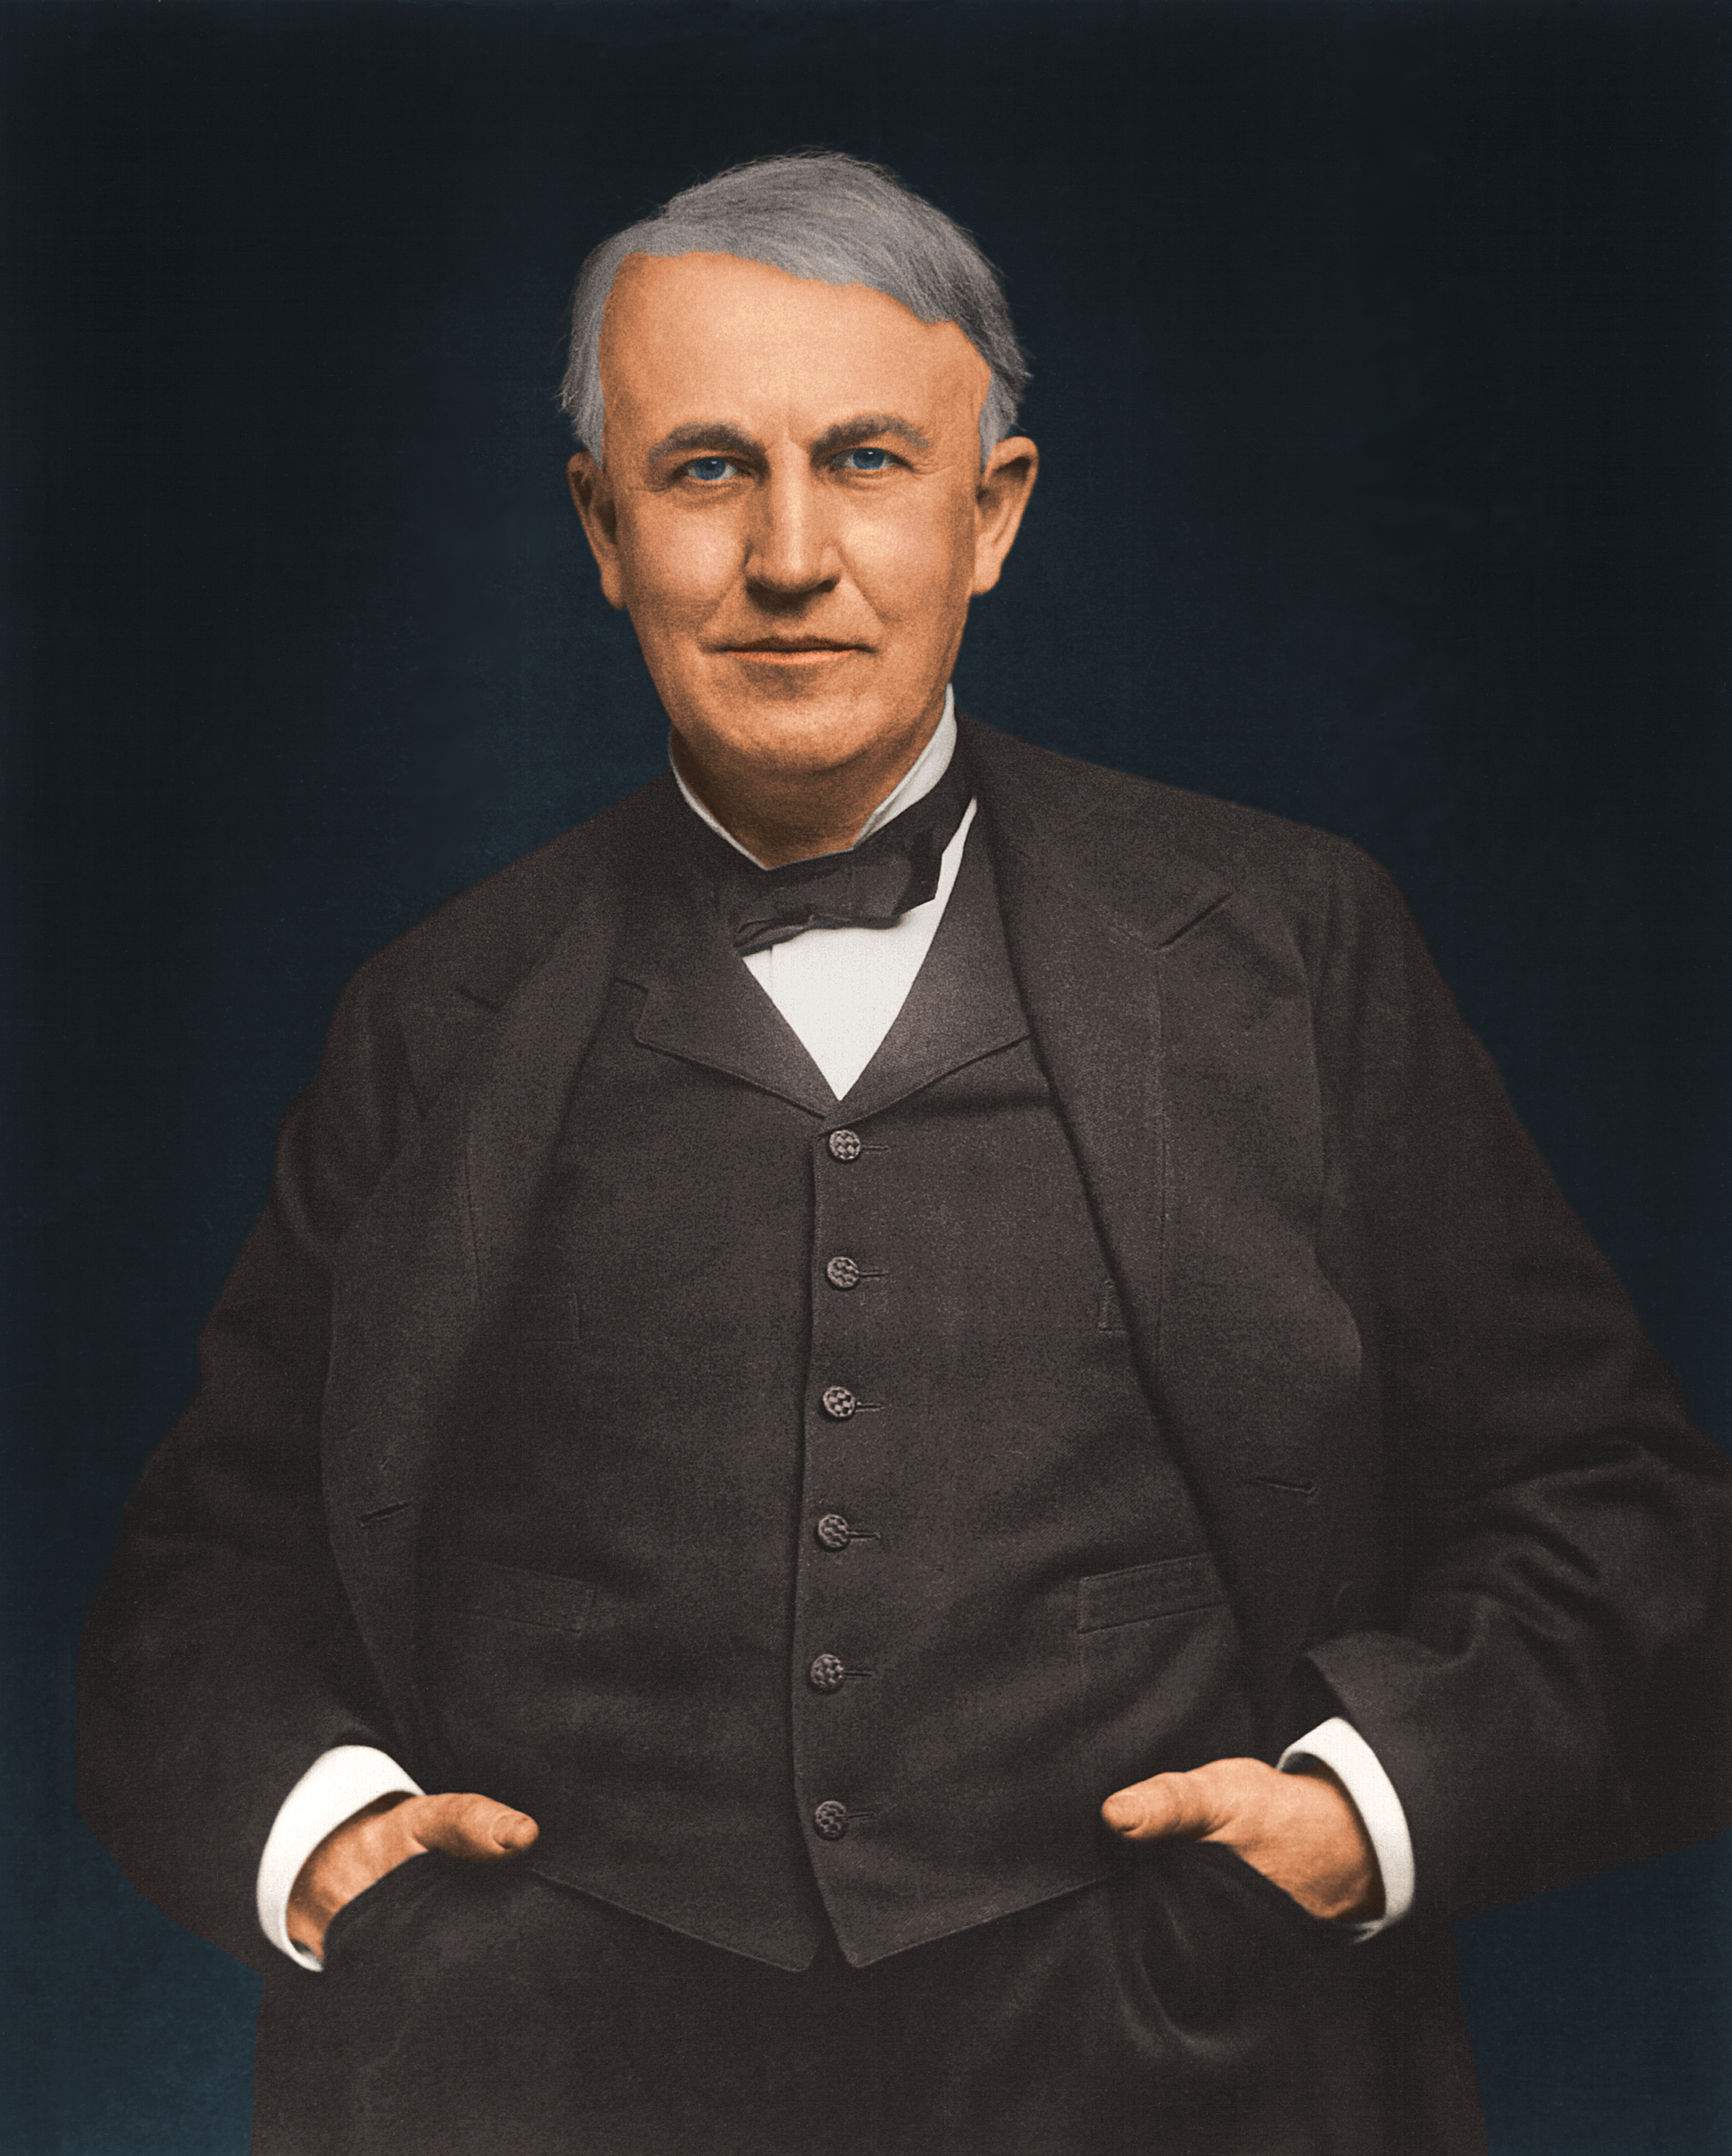 Thomas Edison HISTORY